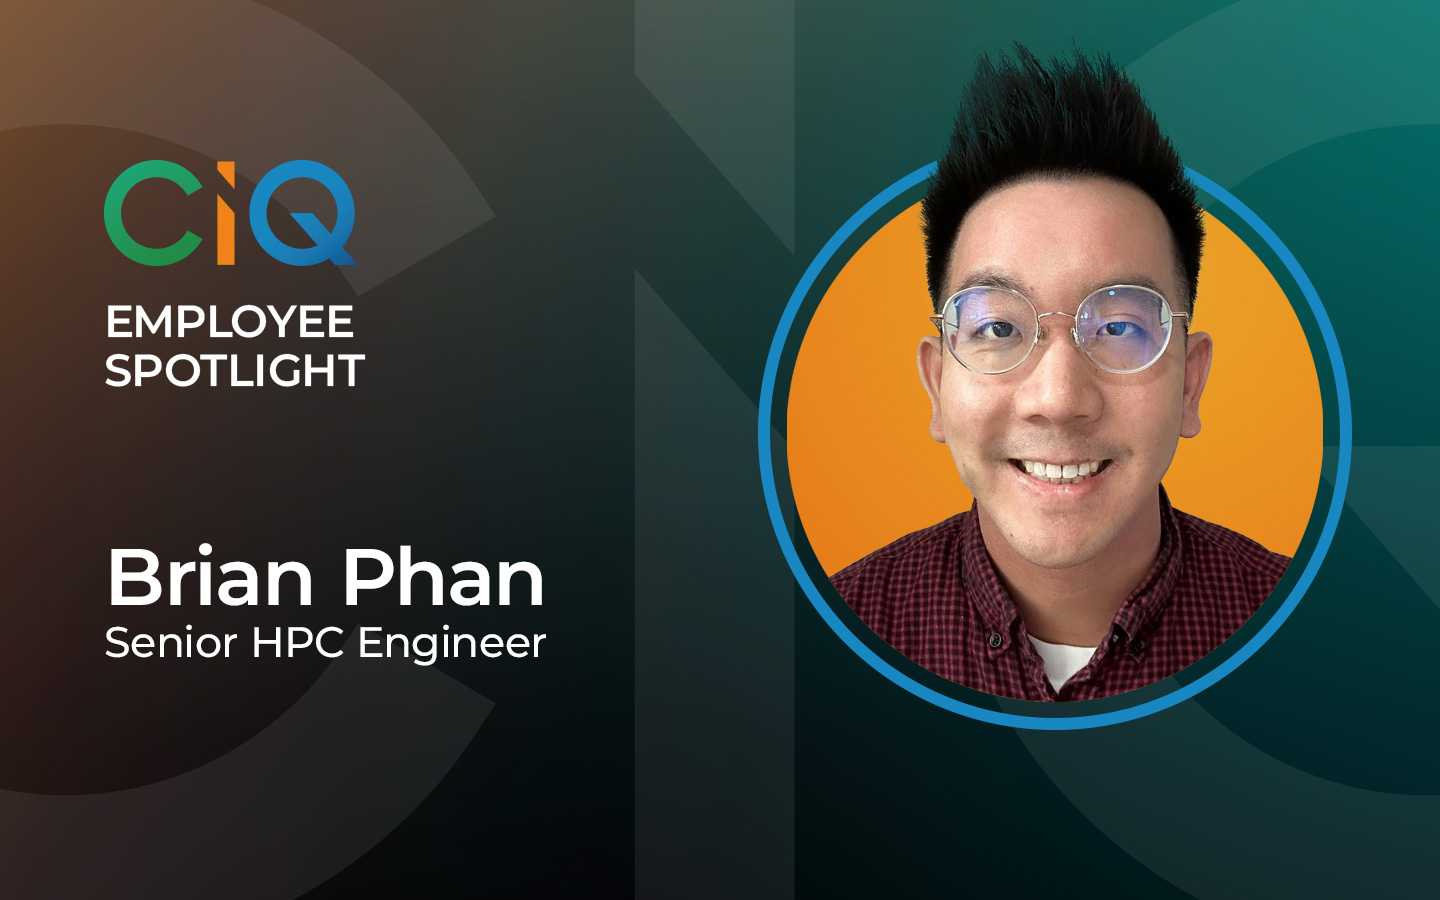 CIQ Employee Spotlight: Brian Phan